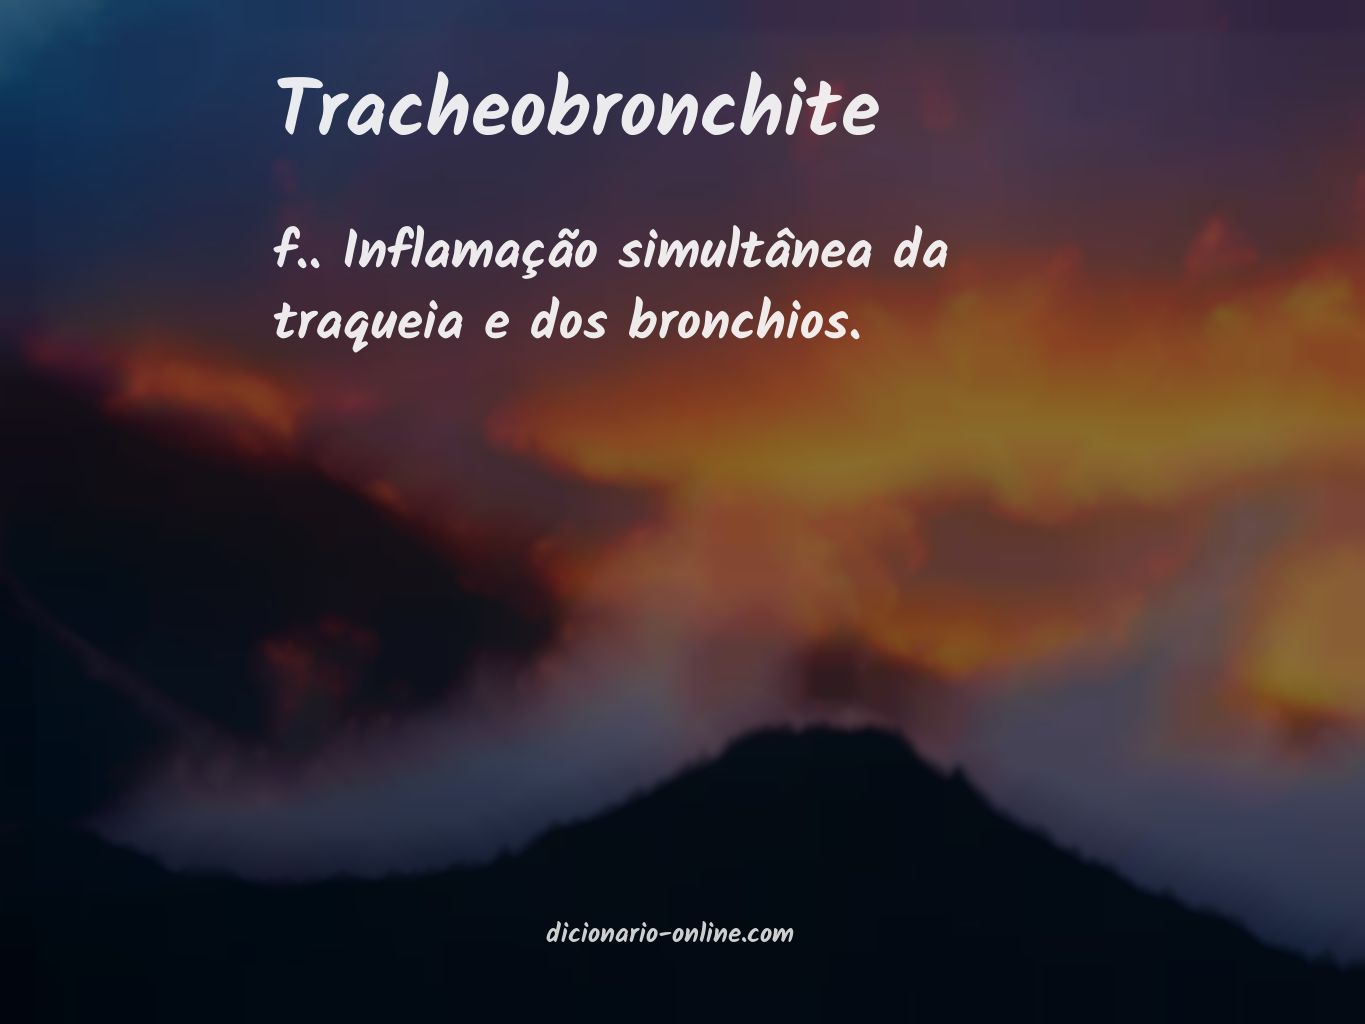 Significado de tracheobronchite